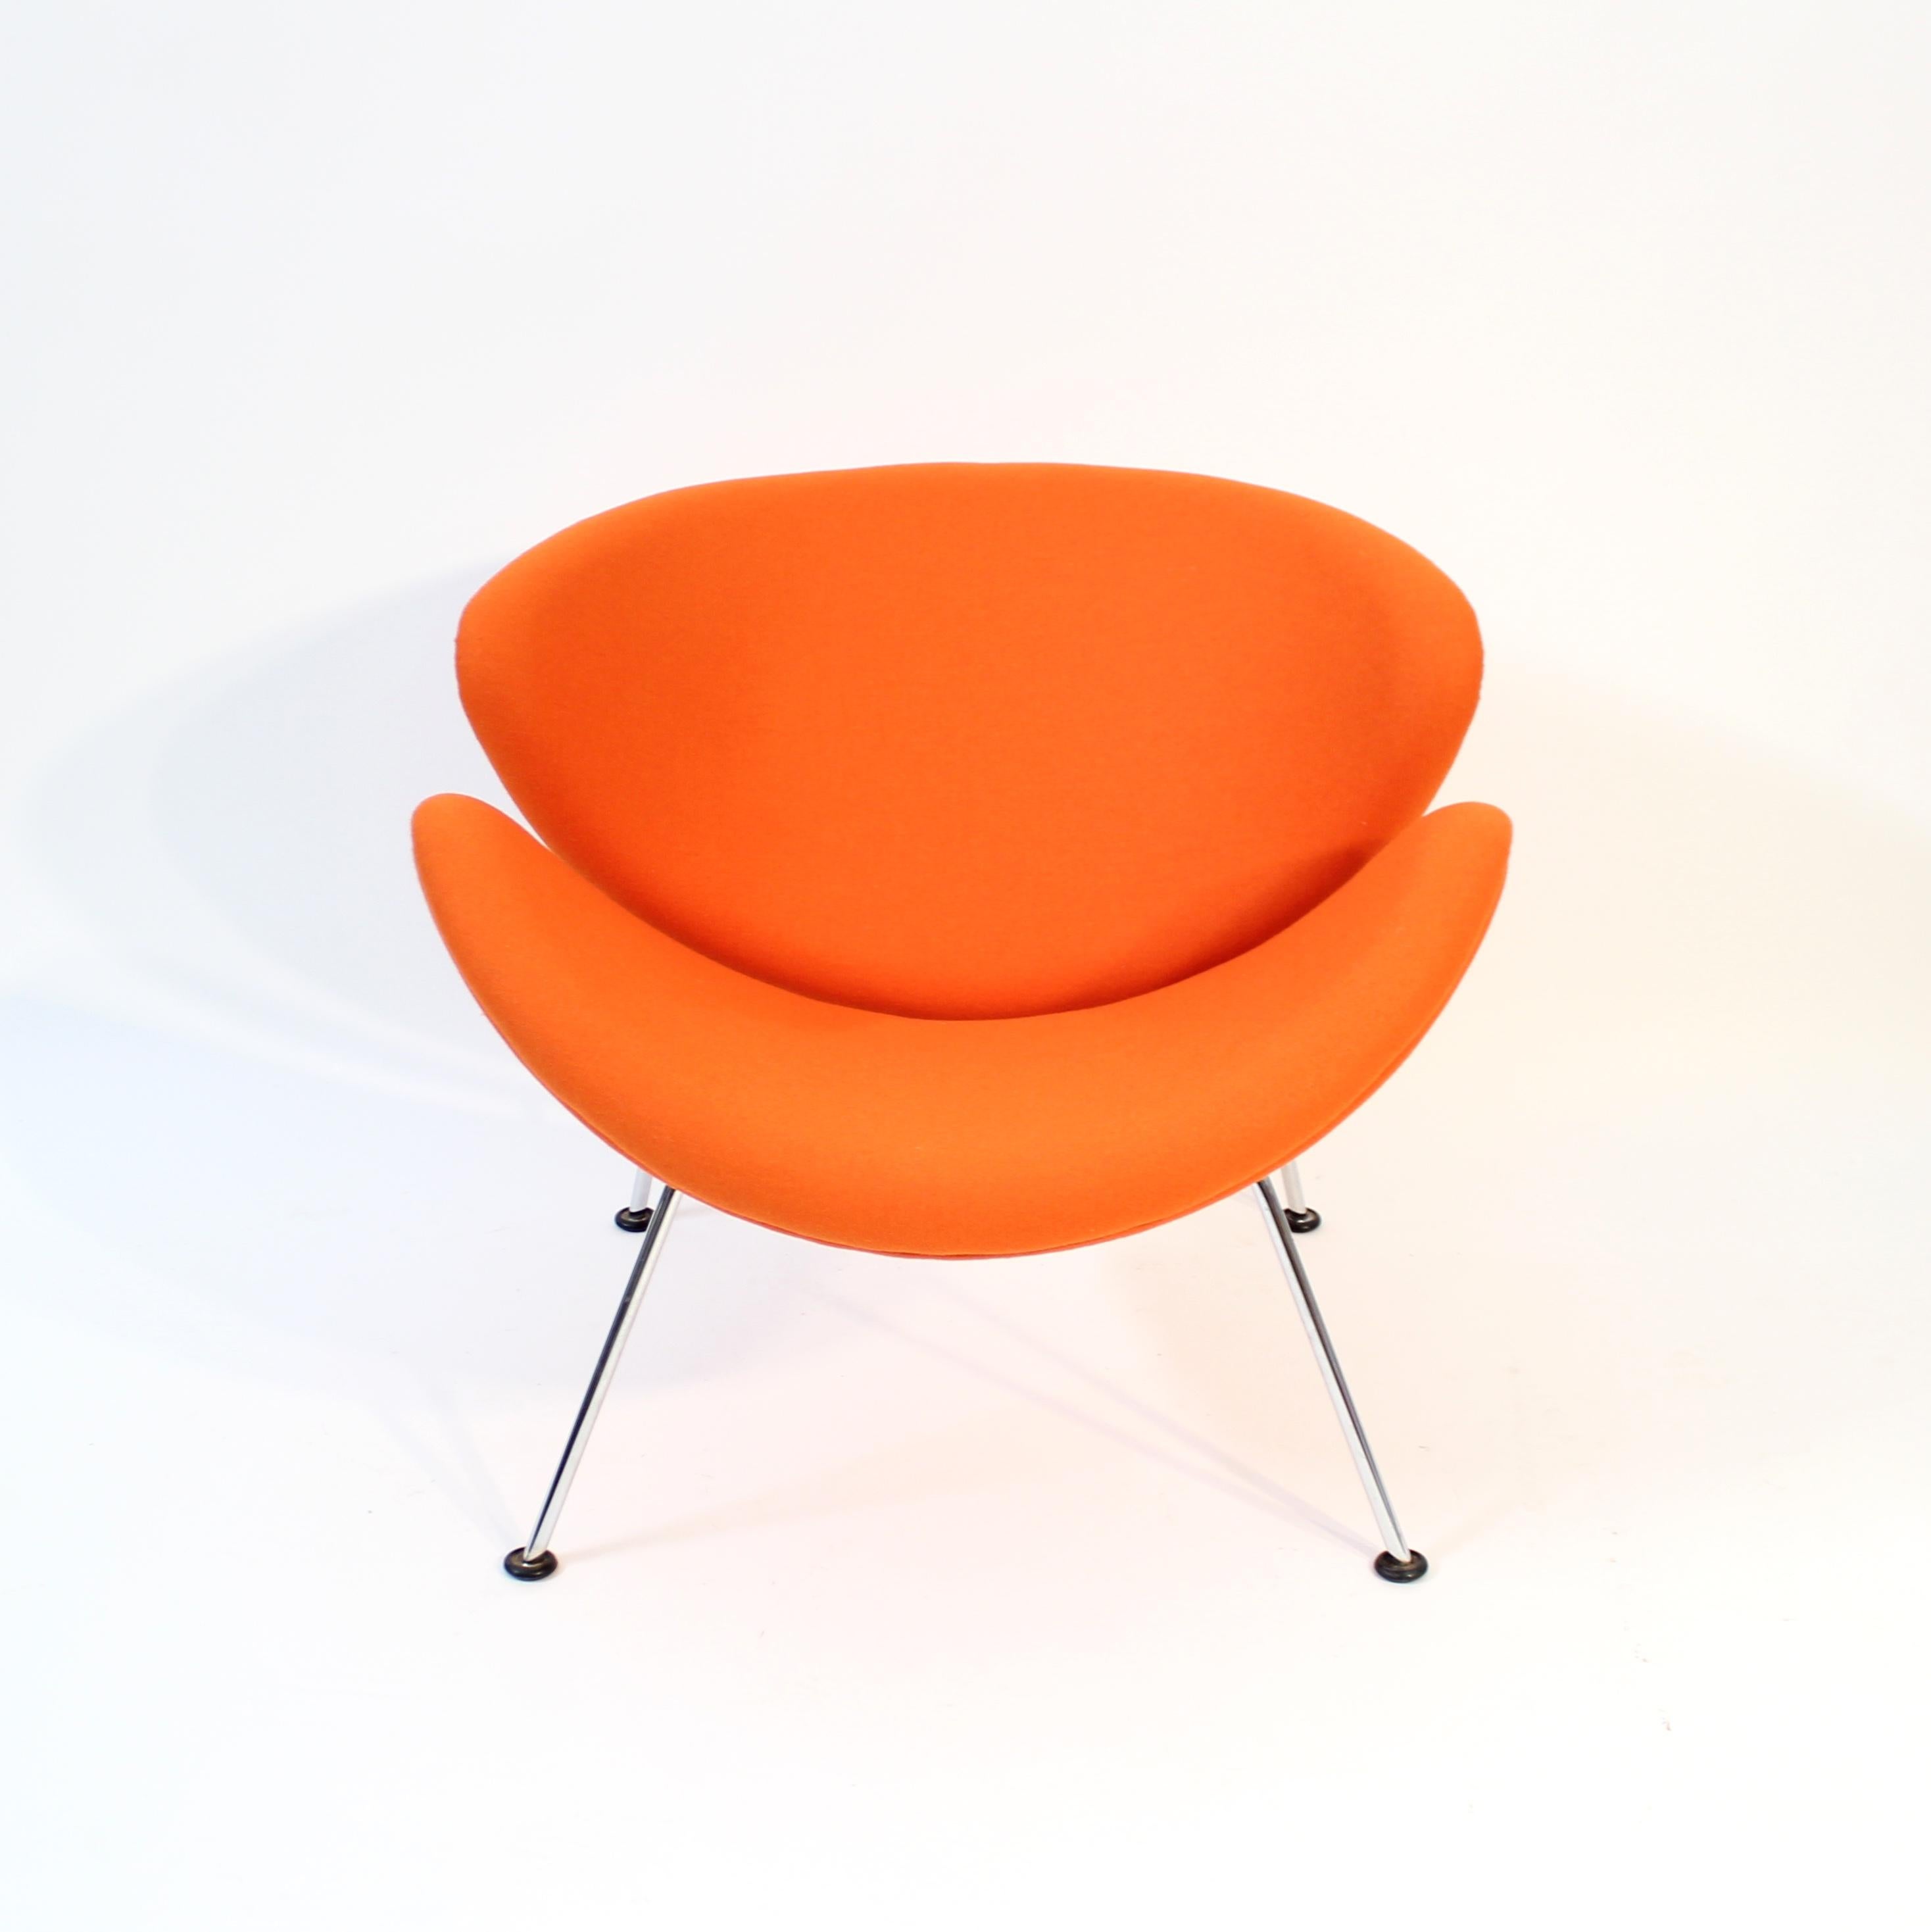 Pierre Paulin, Orange Slice chair, Artifort, 1960 For Sale 1